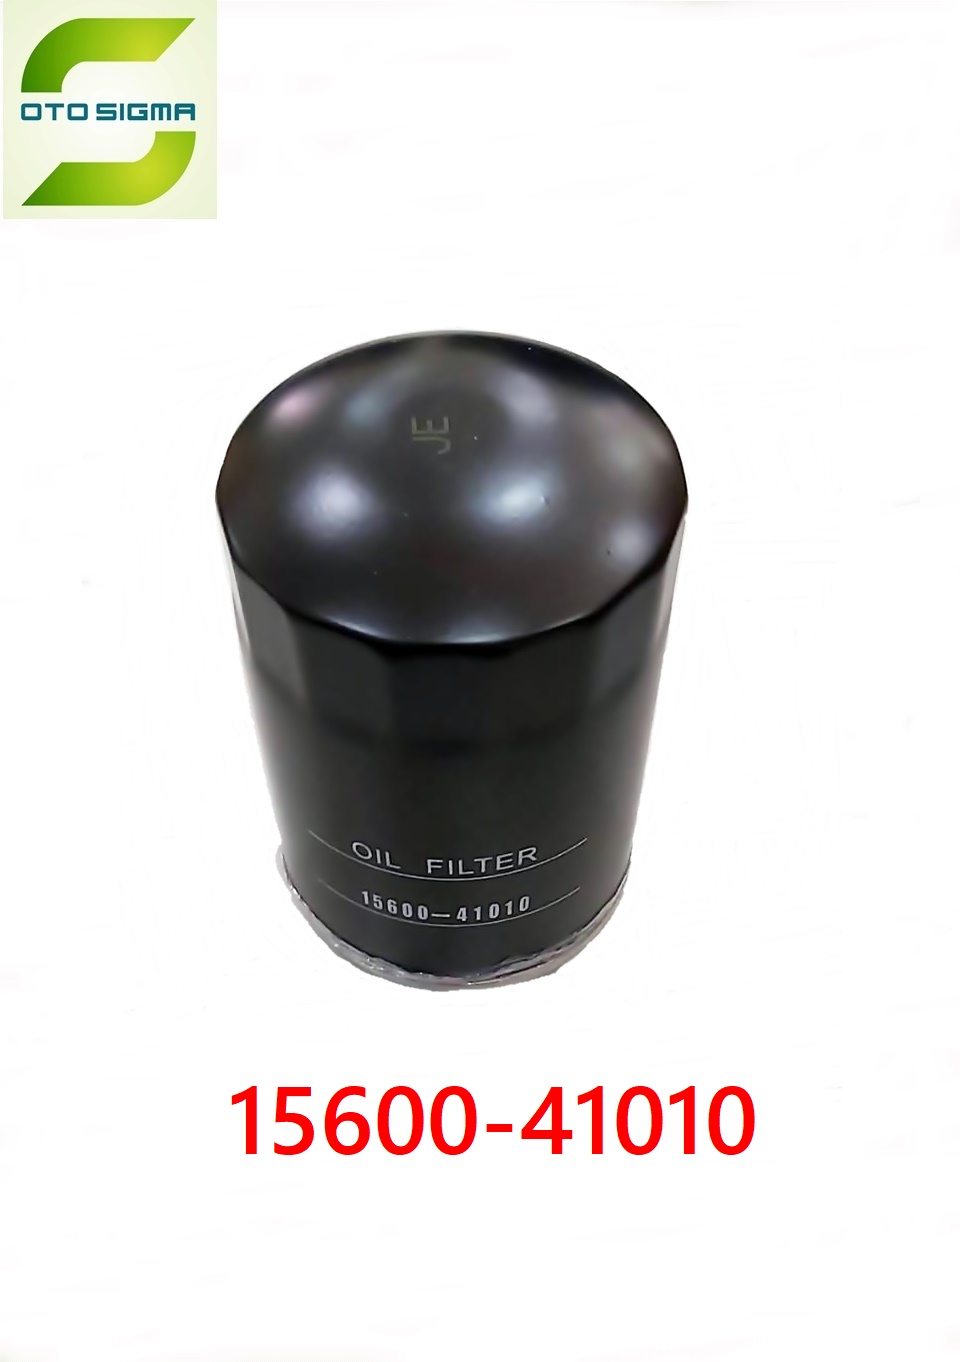  Oil Filter 15600-41010